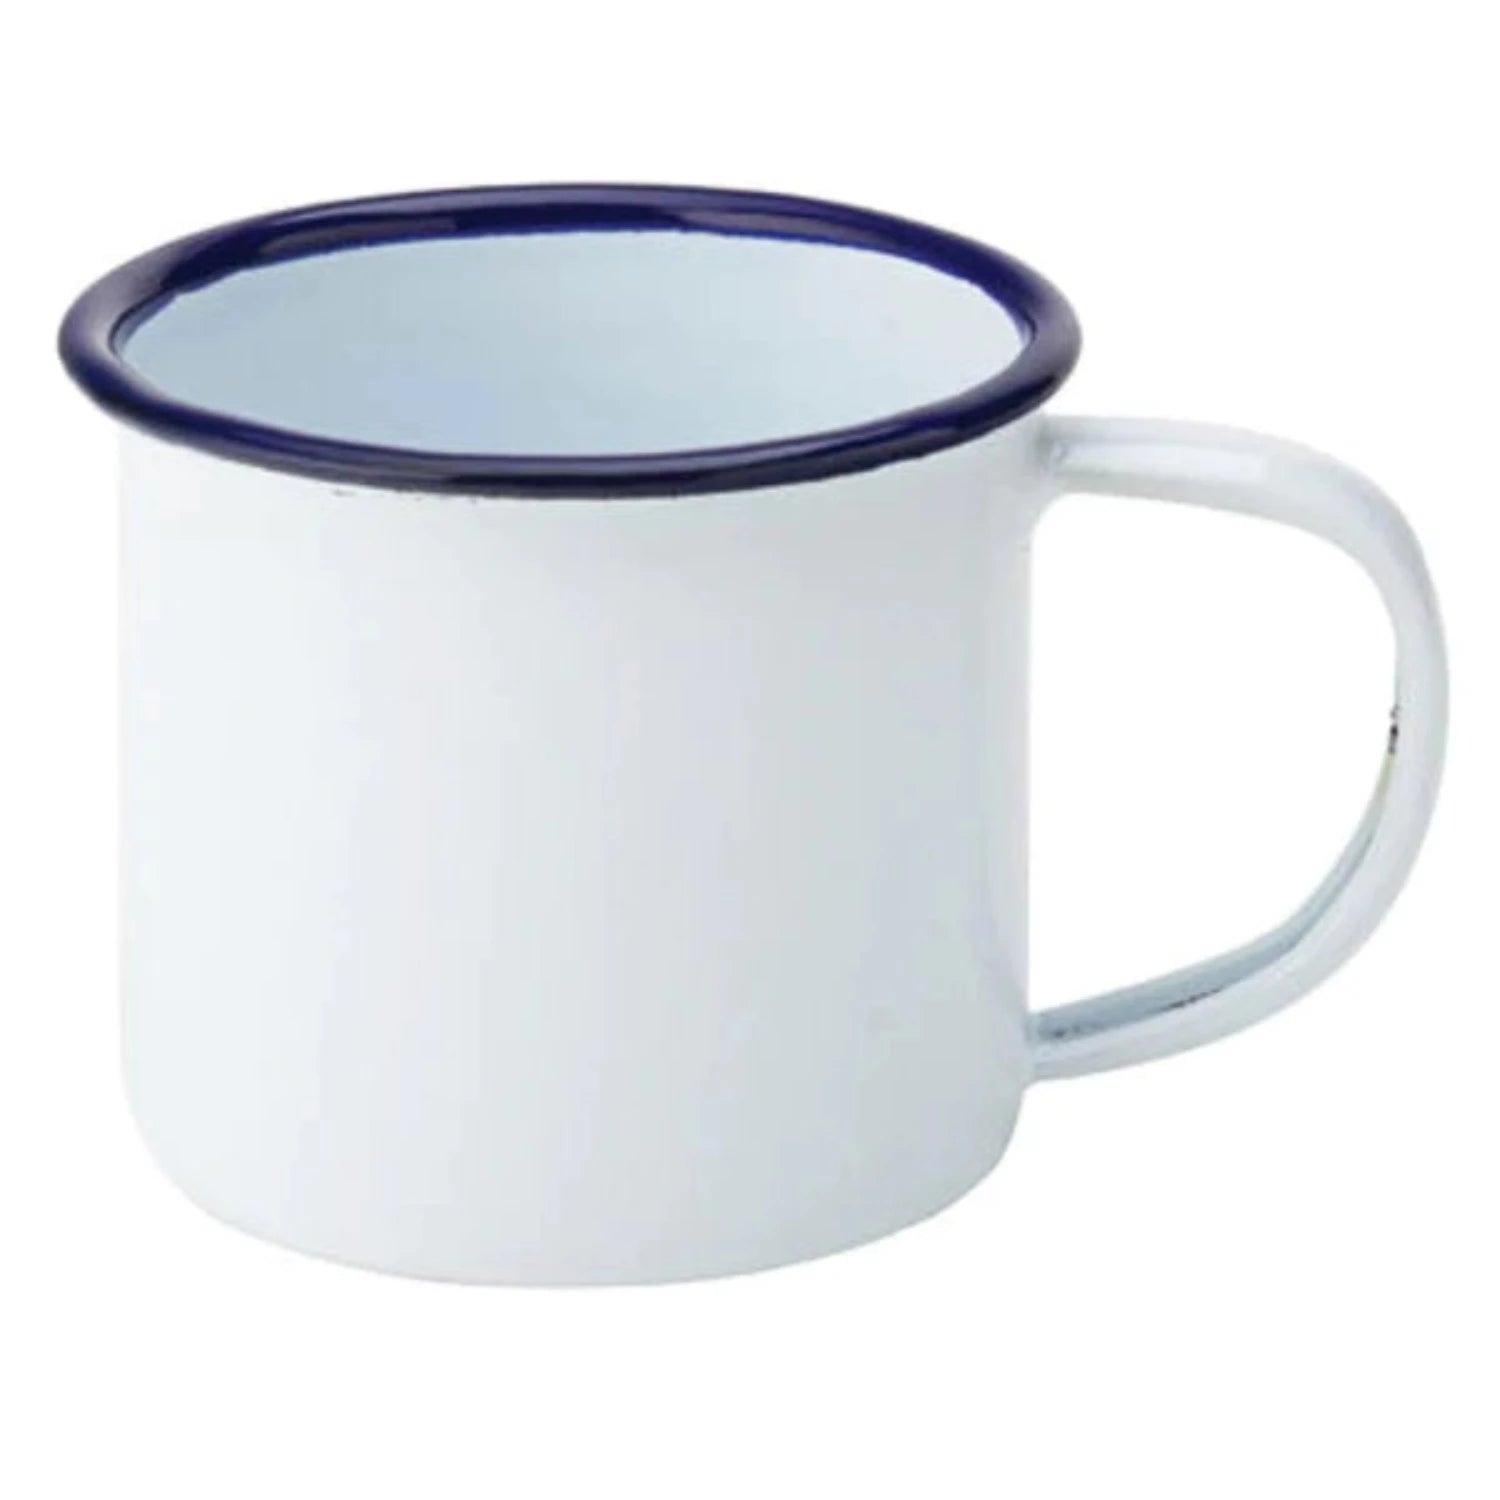 enamel-mug-white-with-blue-rim-36cl/12.5oz-pack-12